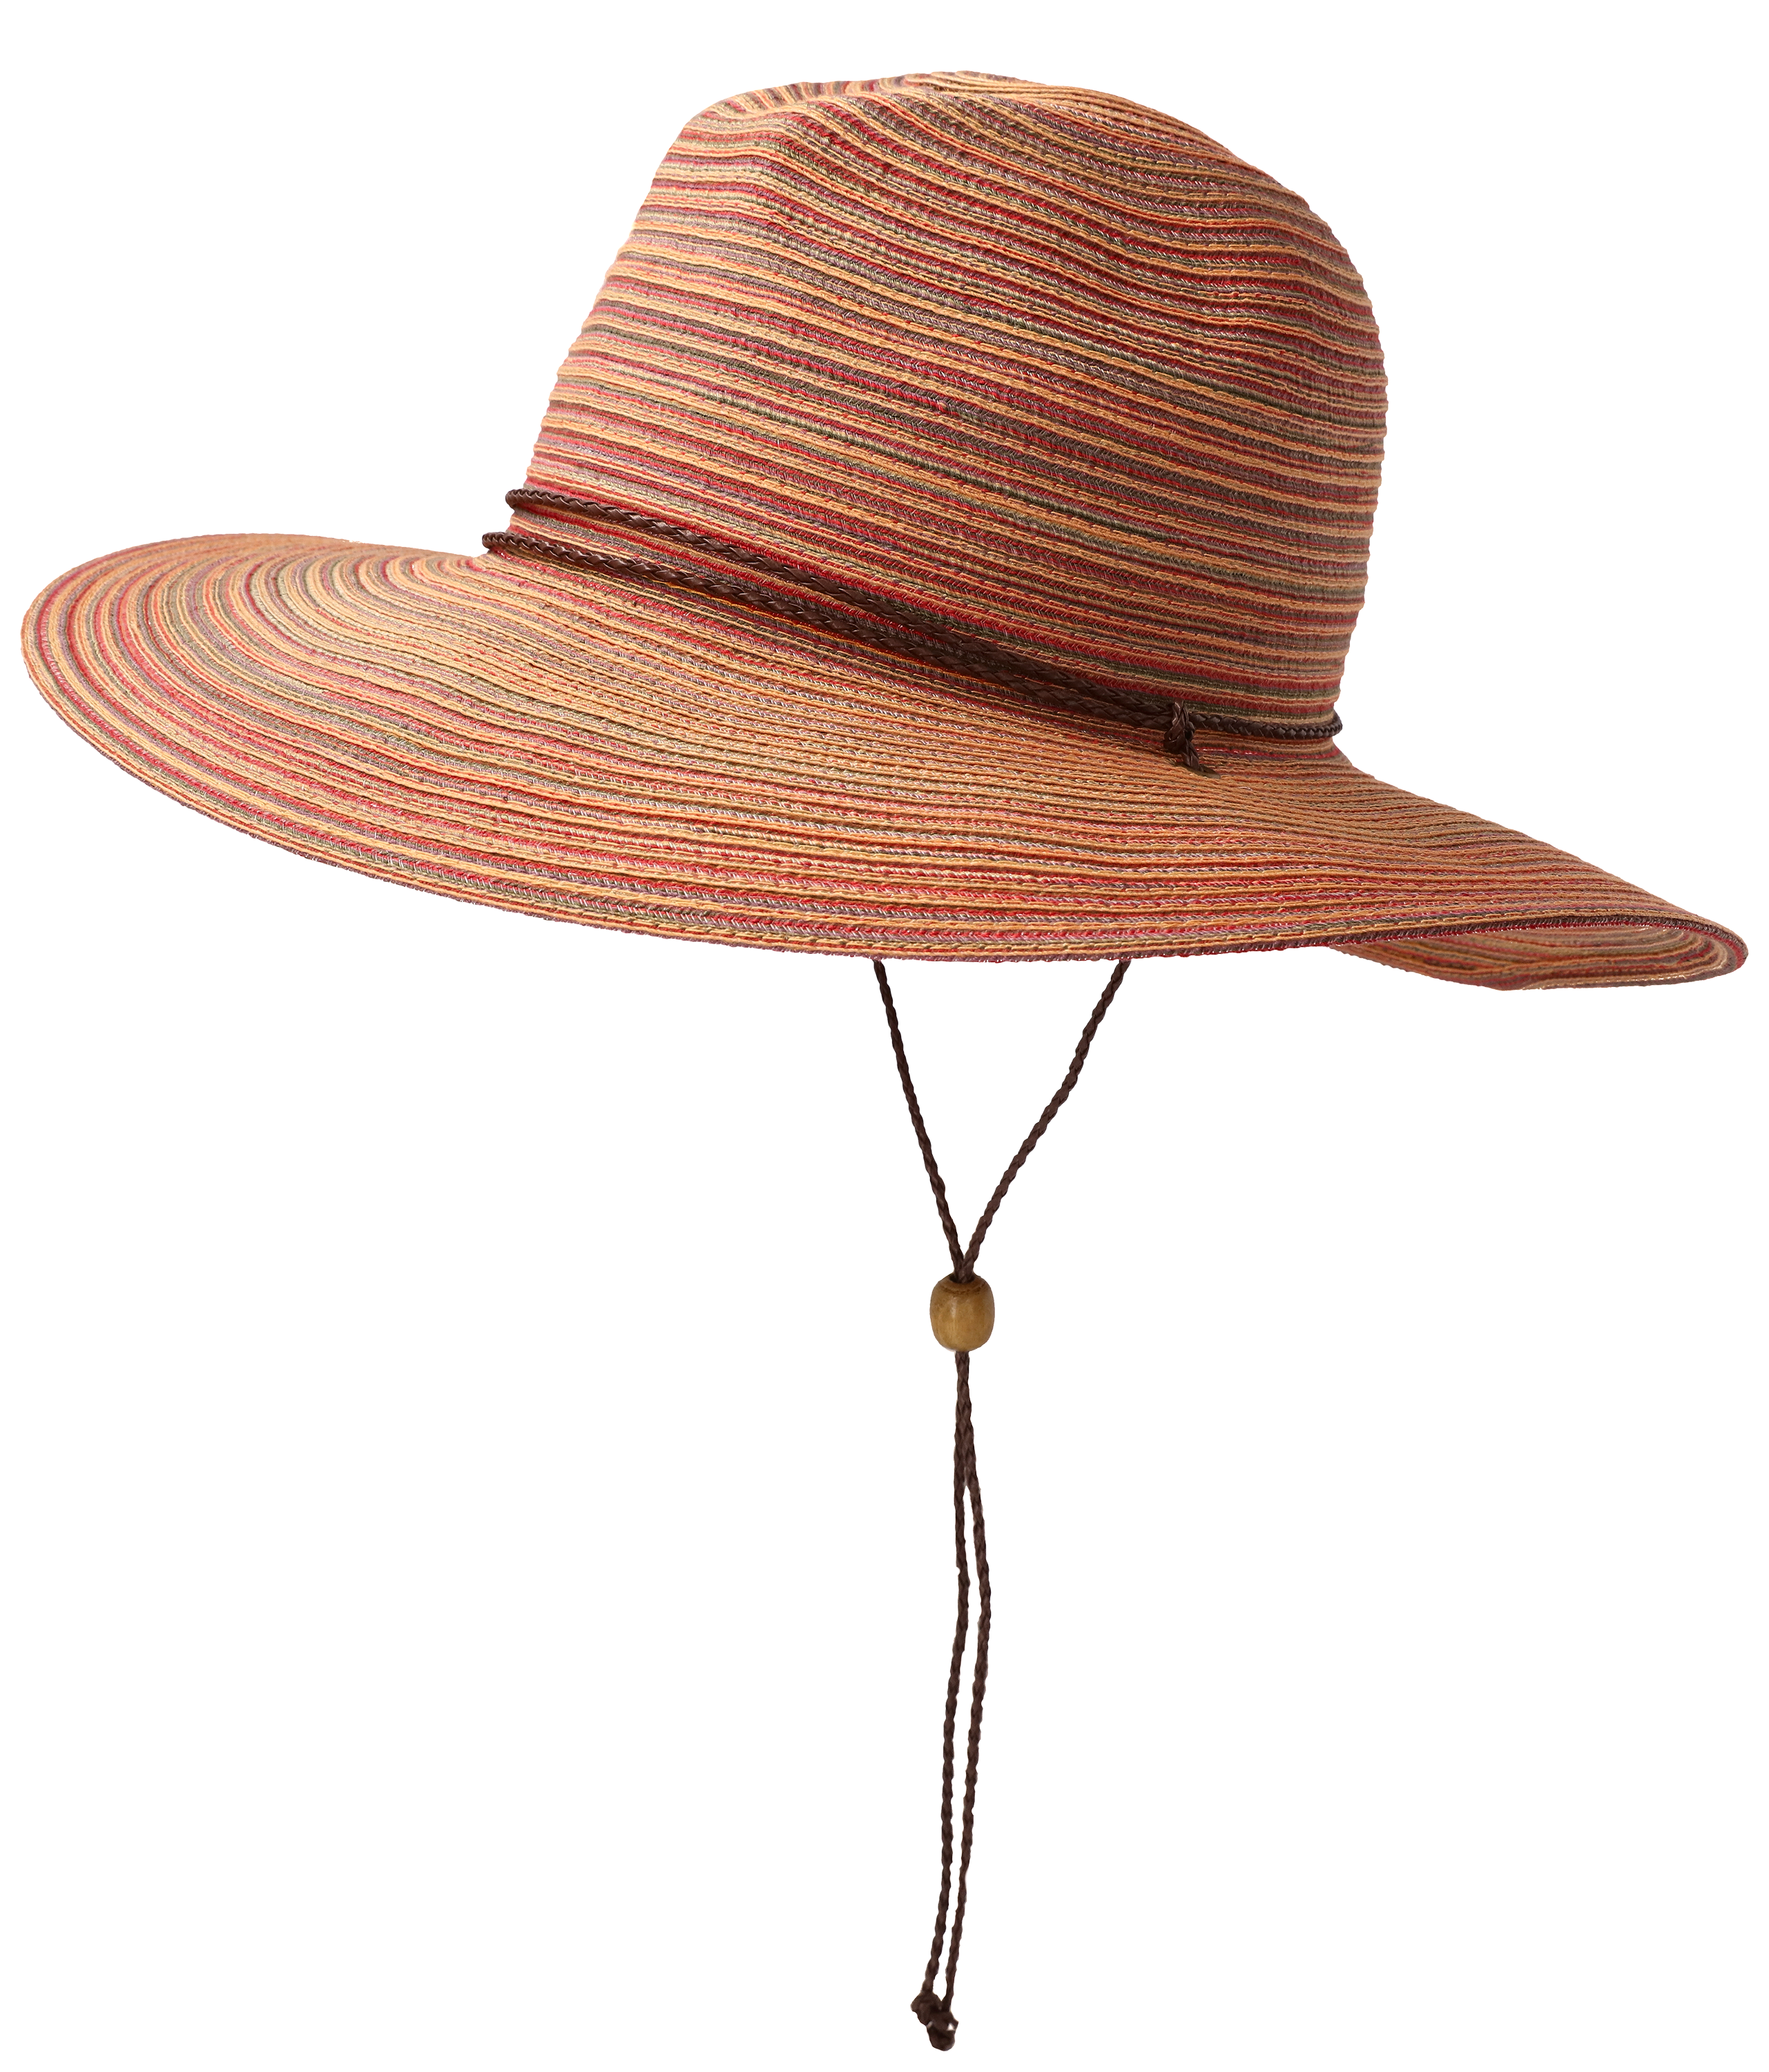 Scala Poly Braid Big Brim Safari Hat for Ladies